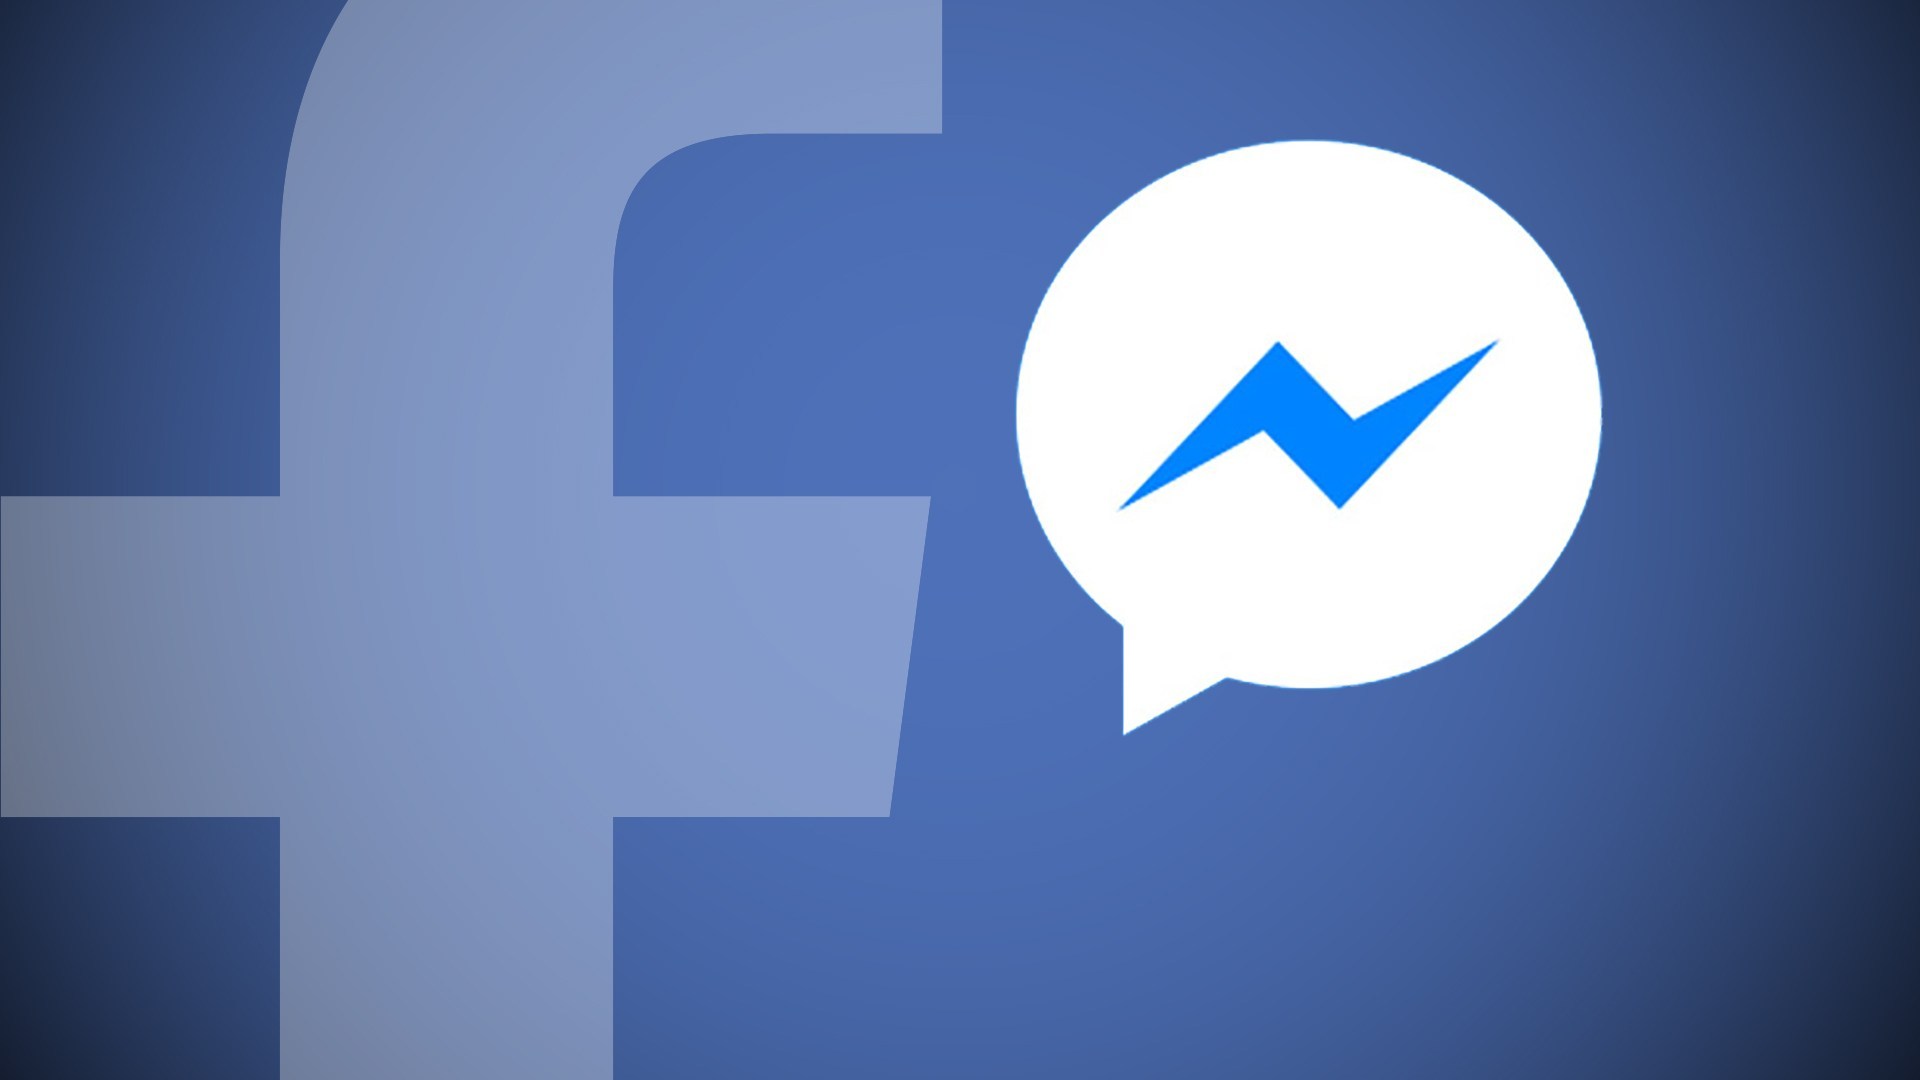 Apakah ada kemungkinan untuk memulihkan pesan yang dihapus Facebook? 2